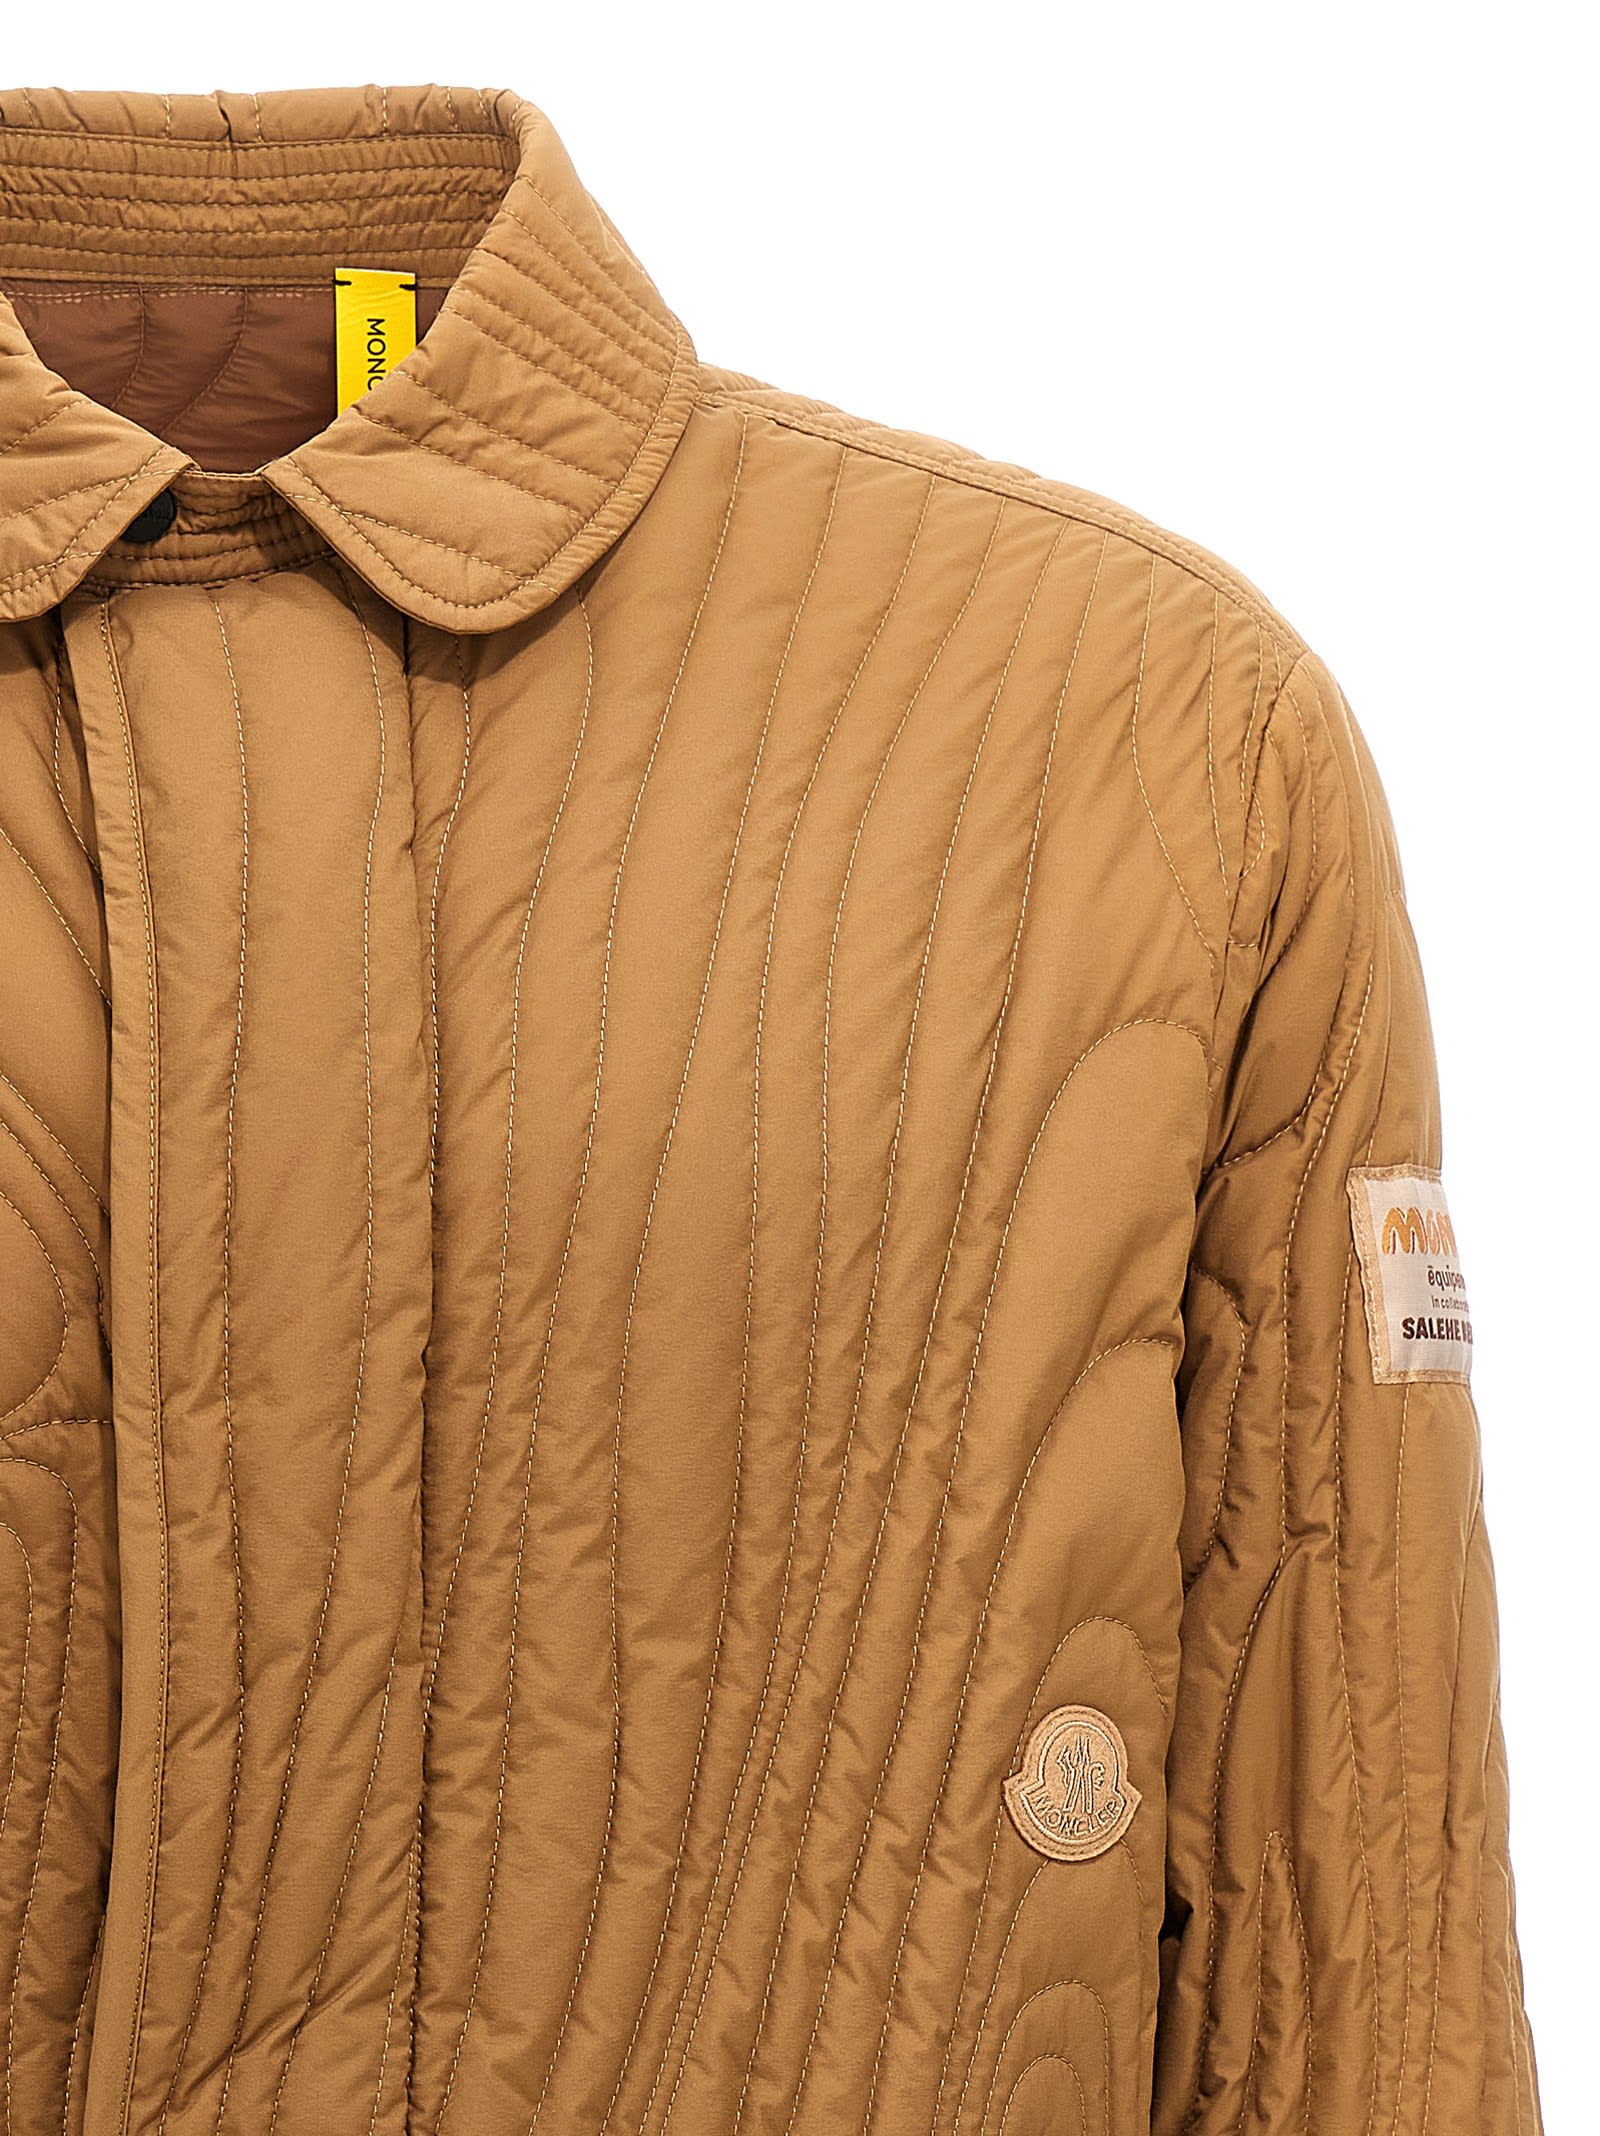 Shop Moncler Genius X Salehe Bembury Harter Jacket In Brown